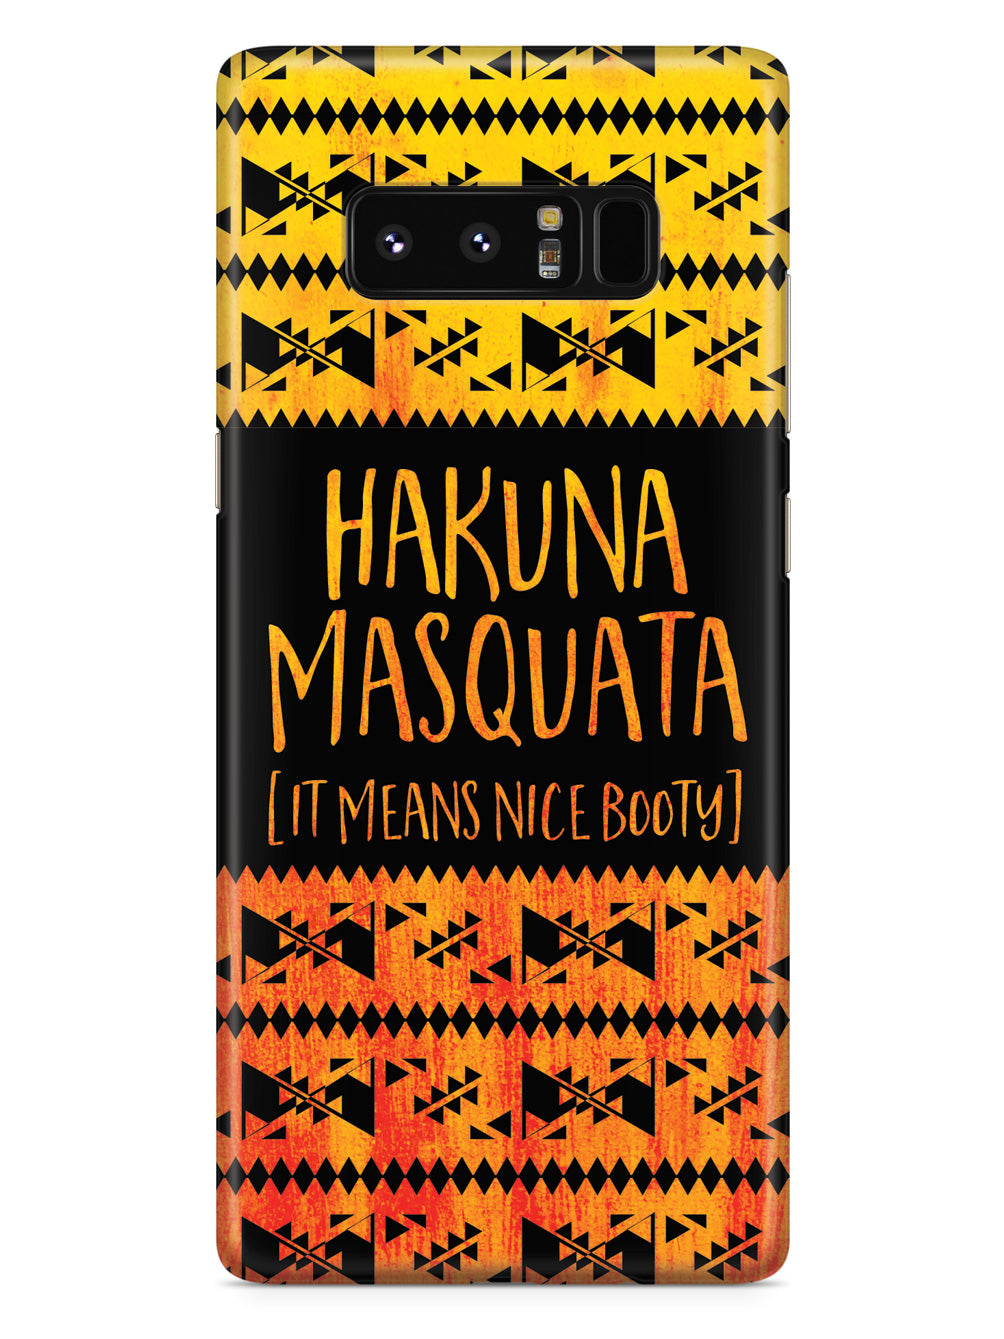 Hakuna Masquata - Nice Booty Case